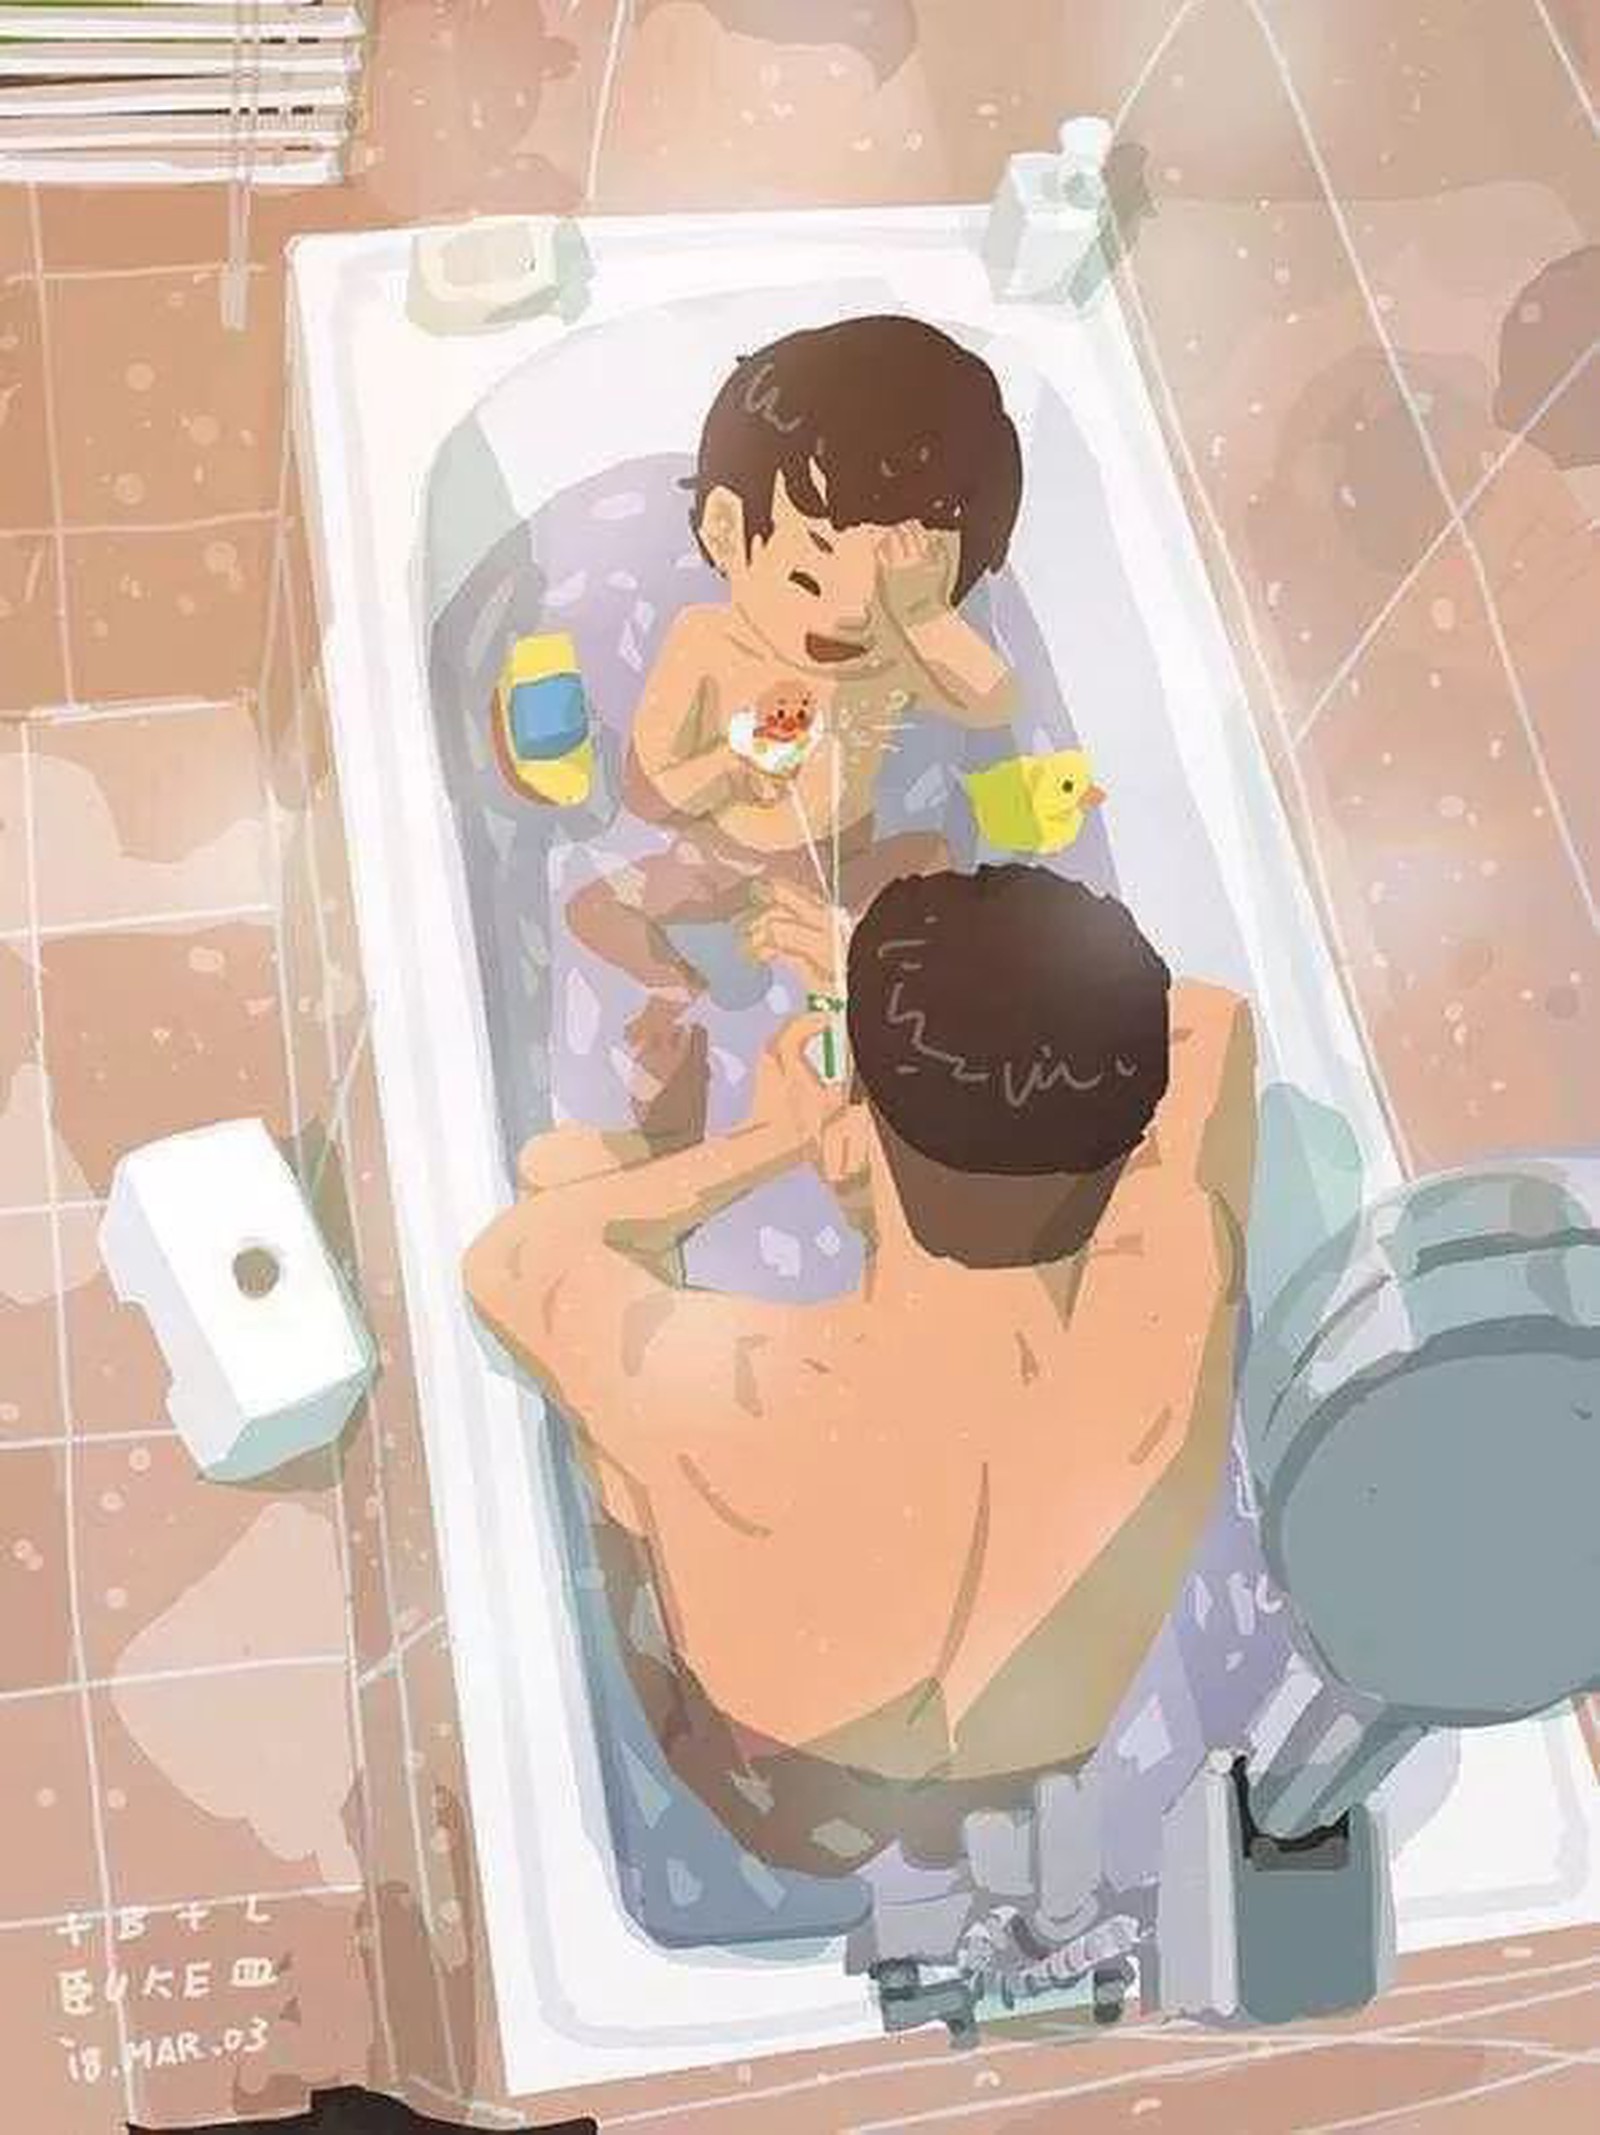 Ванна мама трусы. Яой в ванной. Мальчик в ванной. Маленький мальчик в ванной.